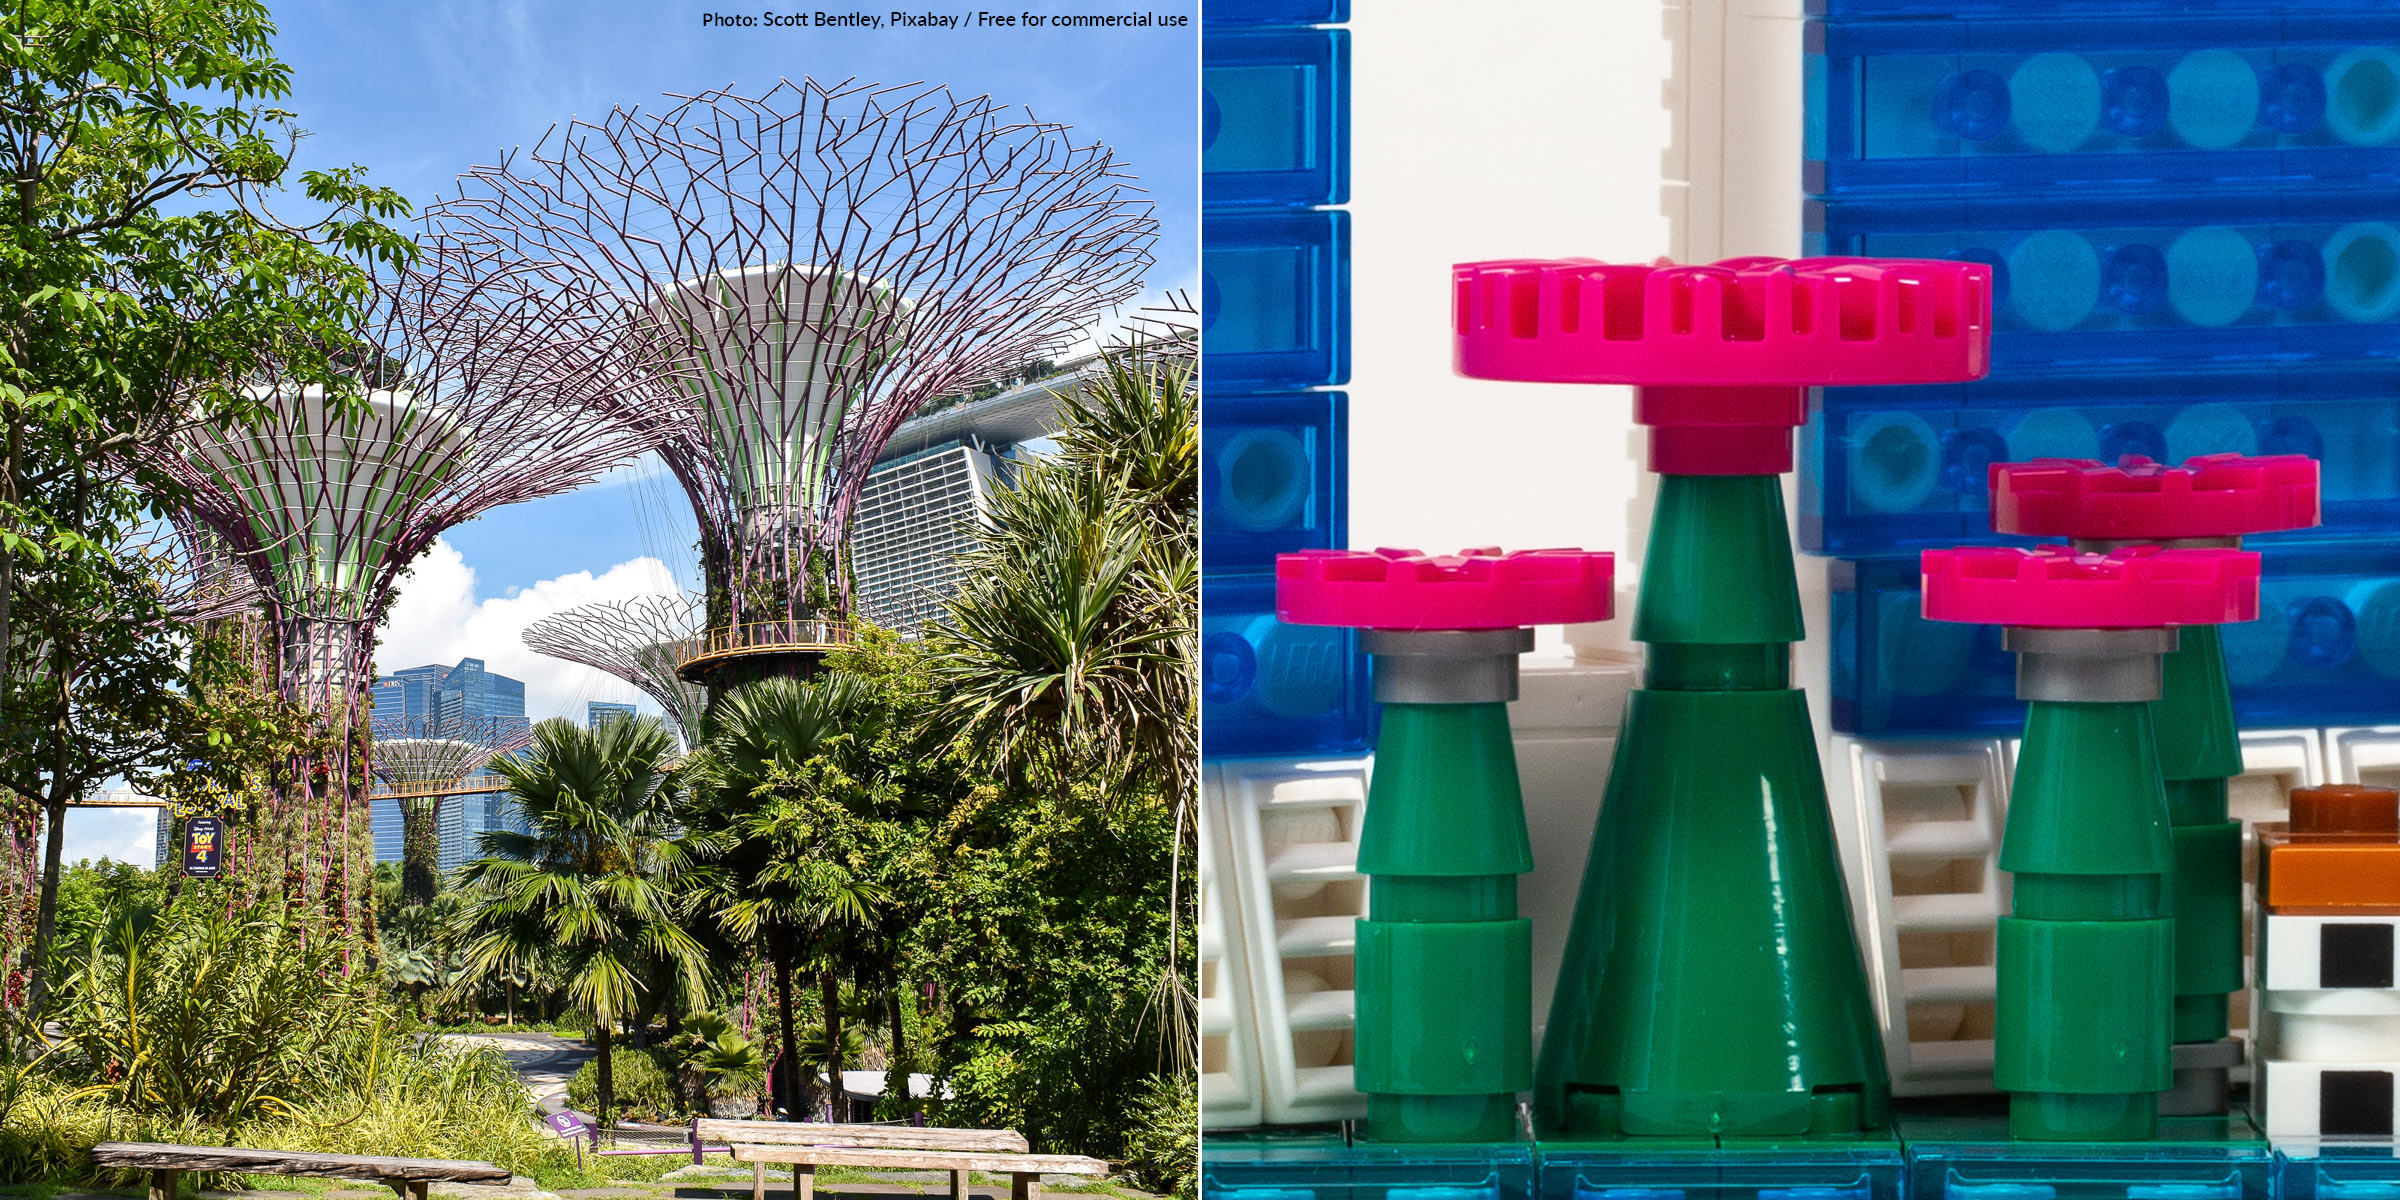 Review: #21057 Singapore Skyline - BRICK ARCHITECT